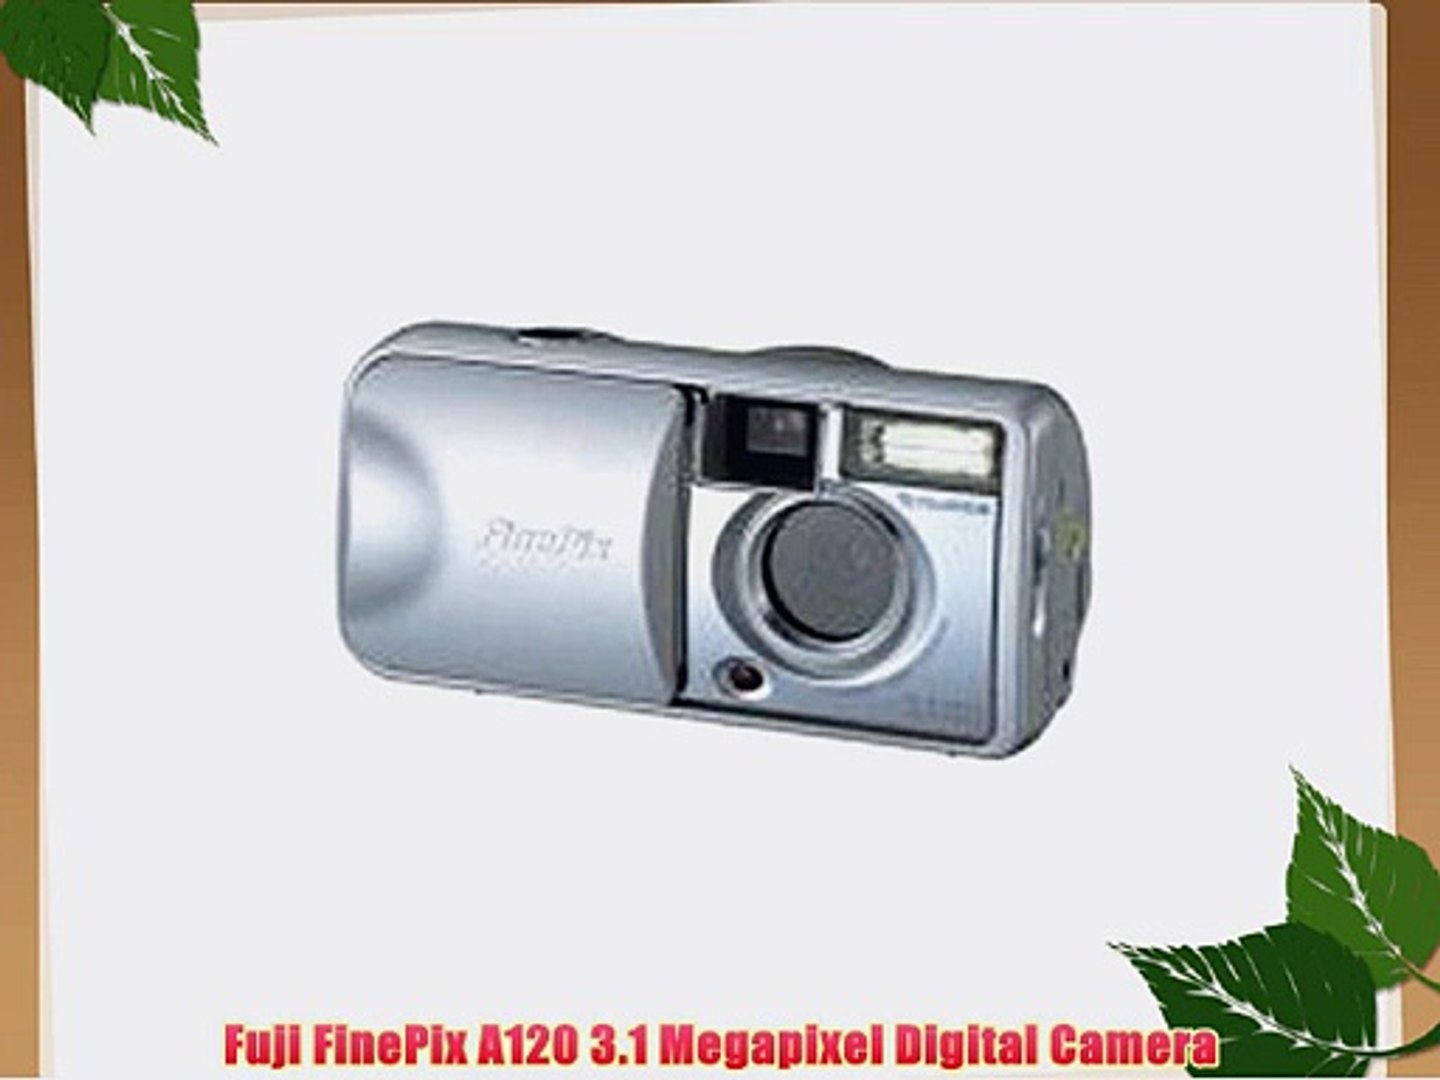 Fuji FinePix A120 3.1 Megapixel Digital Camera - video Dailymotion